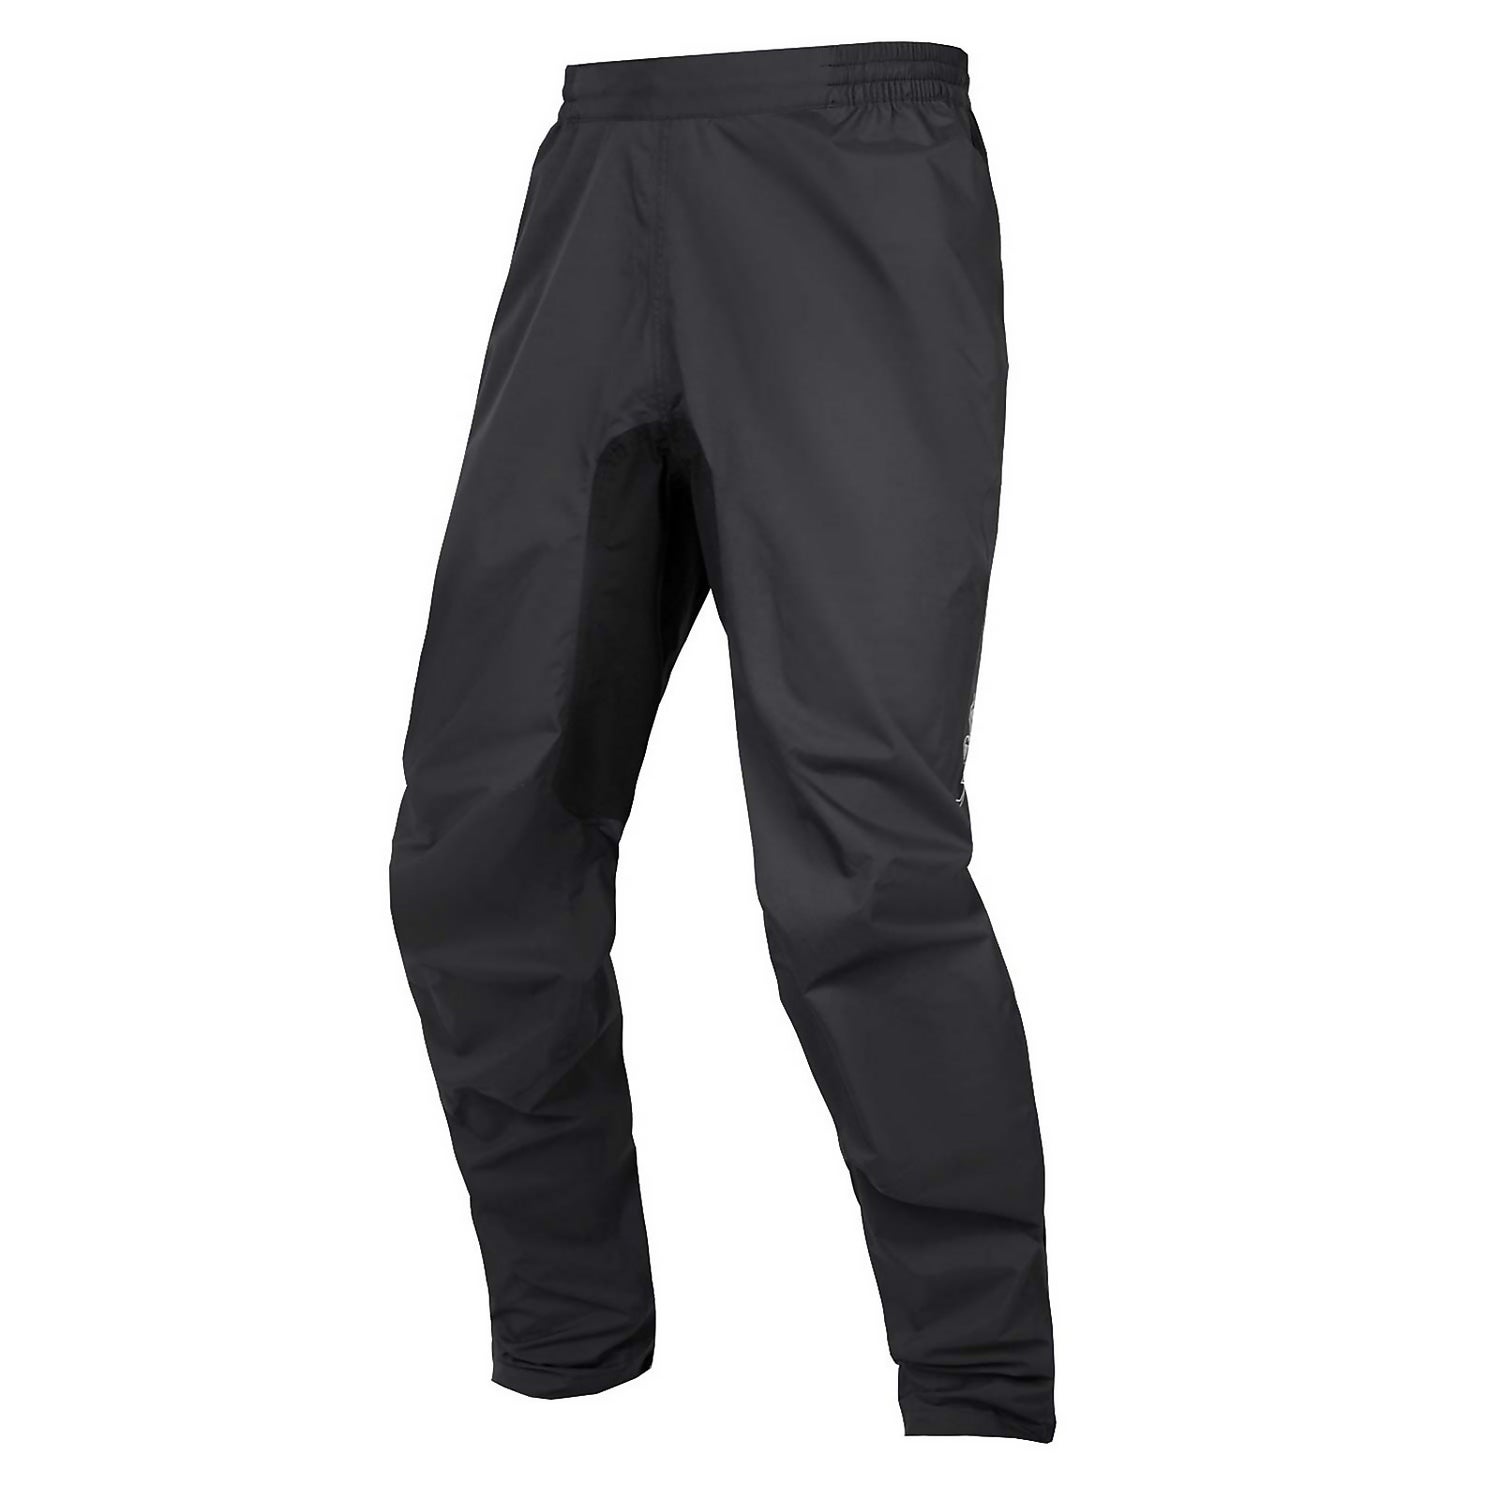 Endura Hummvee Waterproof Cycling Trousers Black Official Endura Retailer 